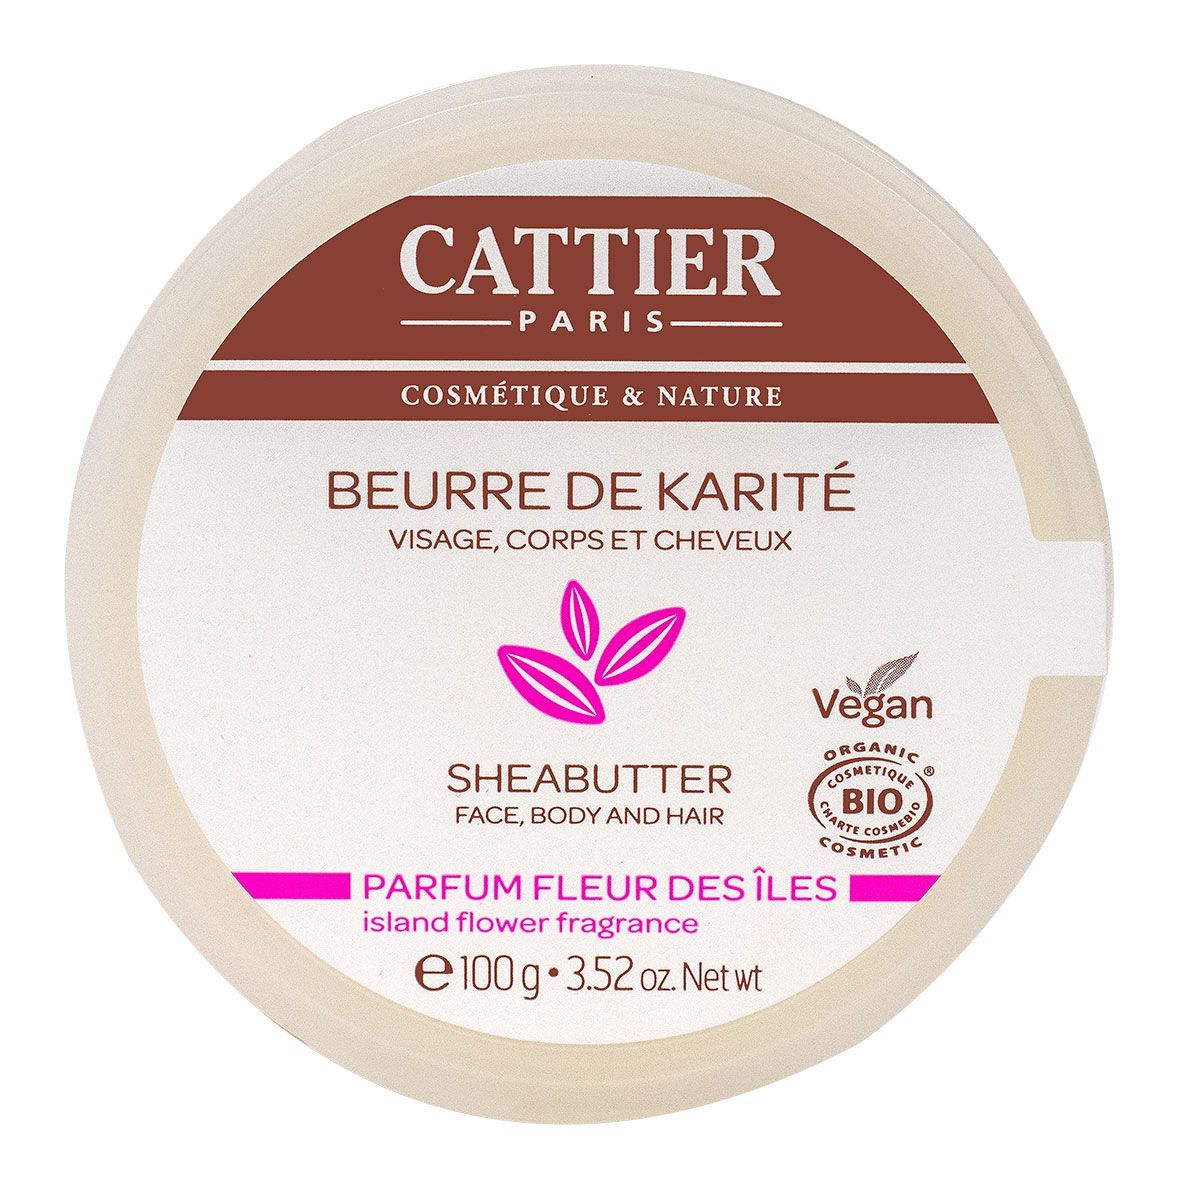 Cattier beurre de karite bio nature 100 gr